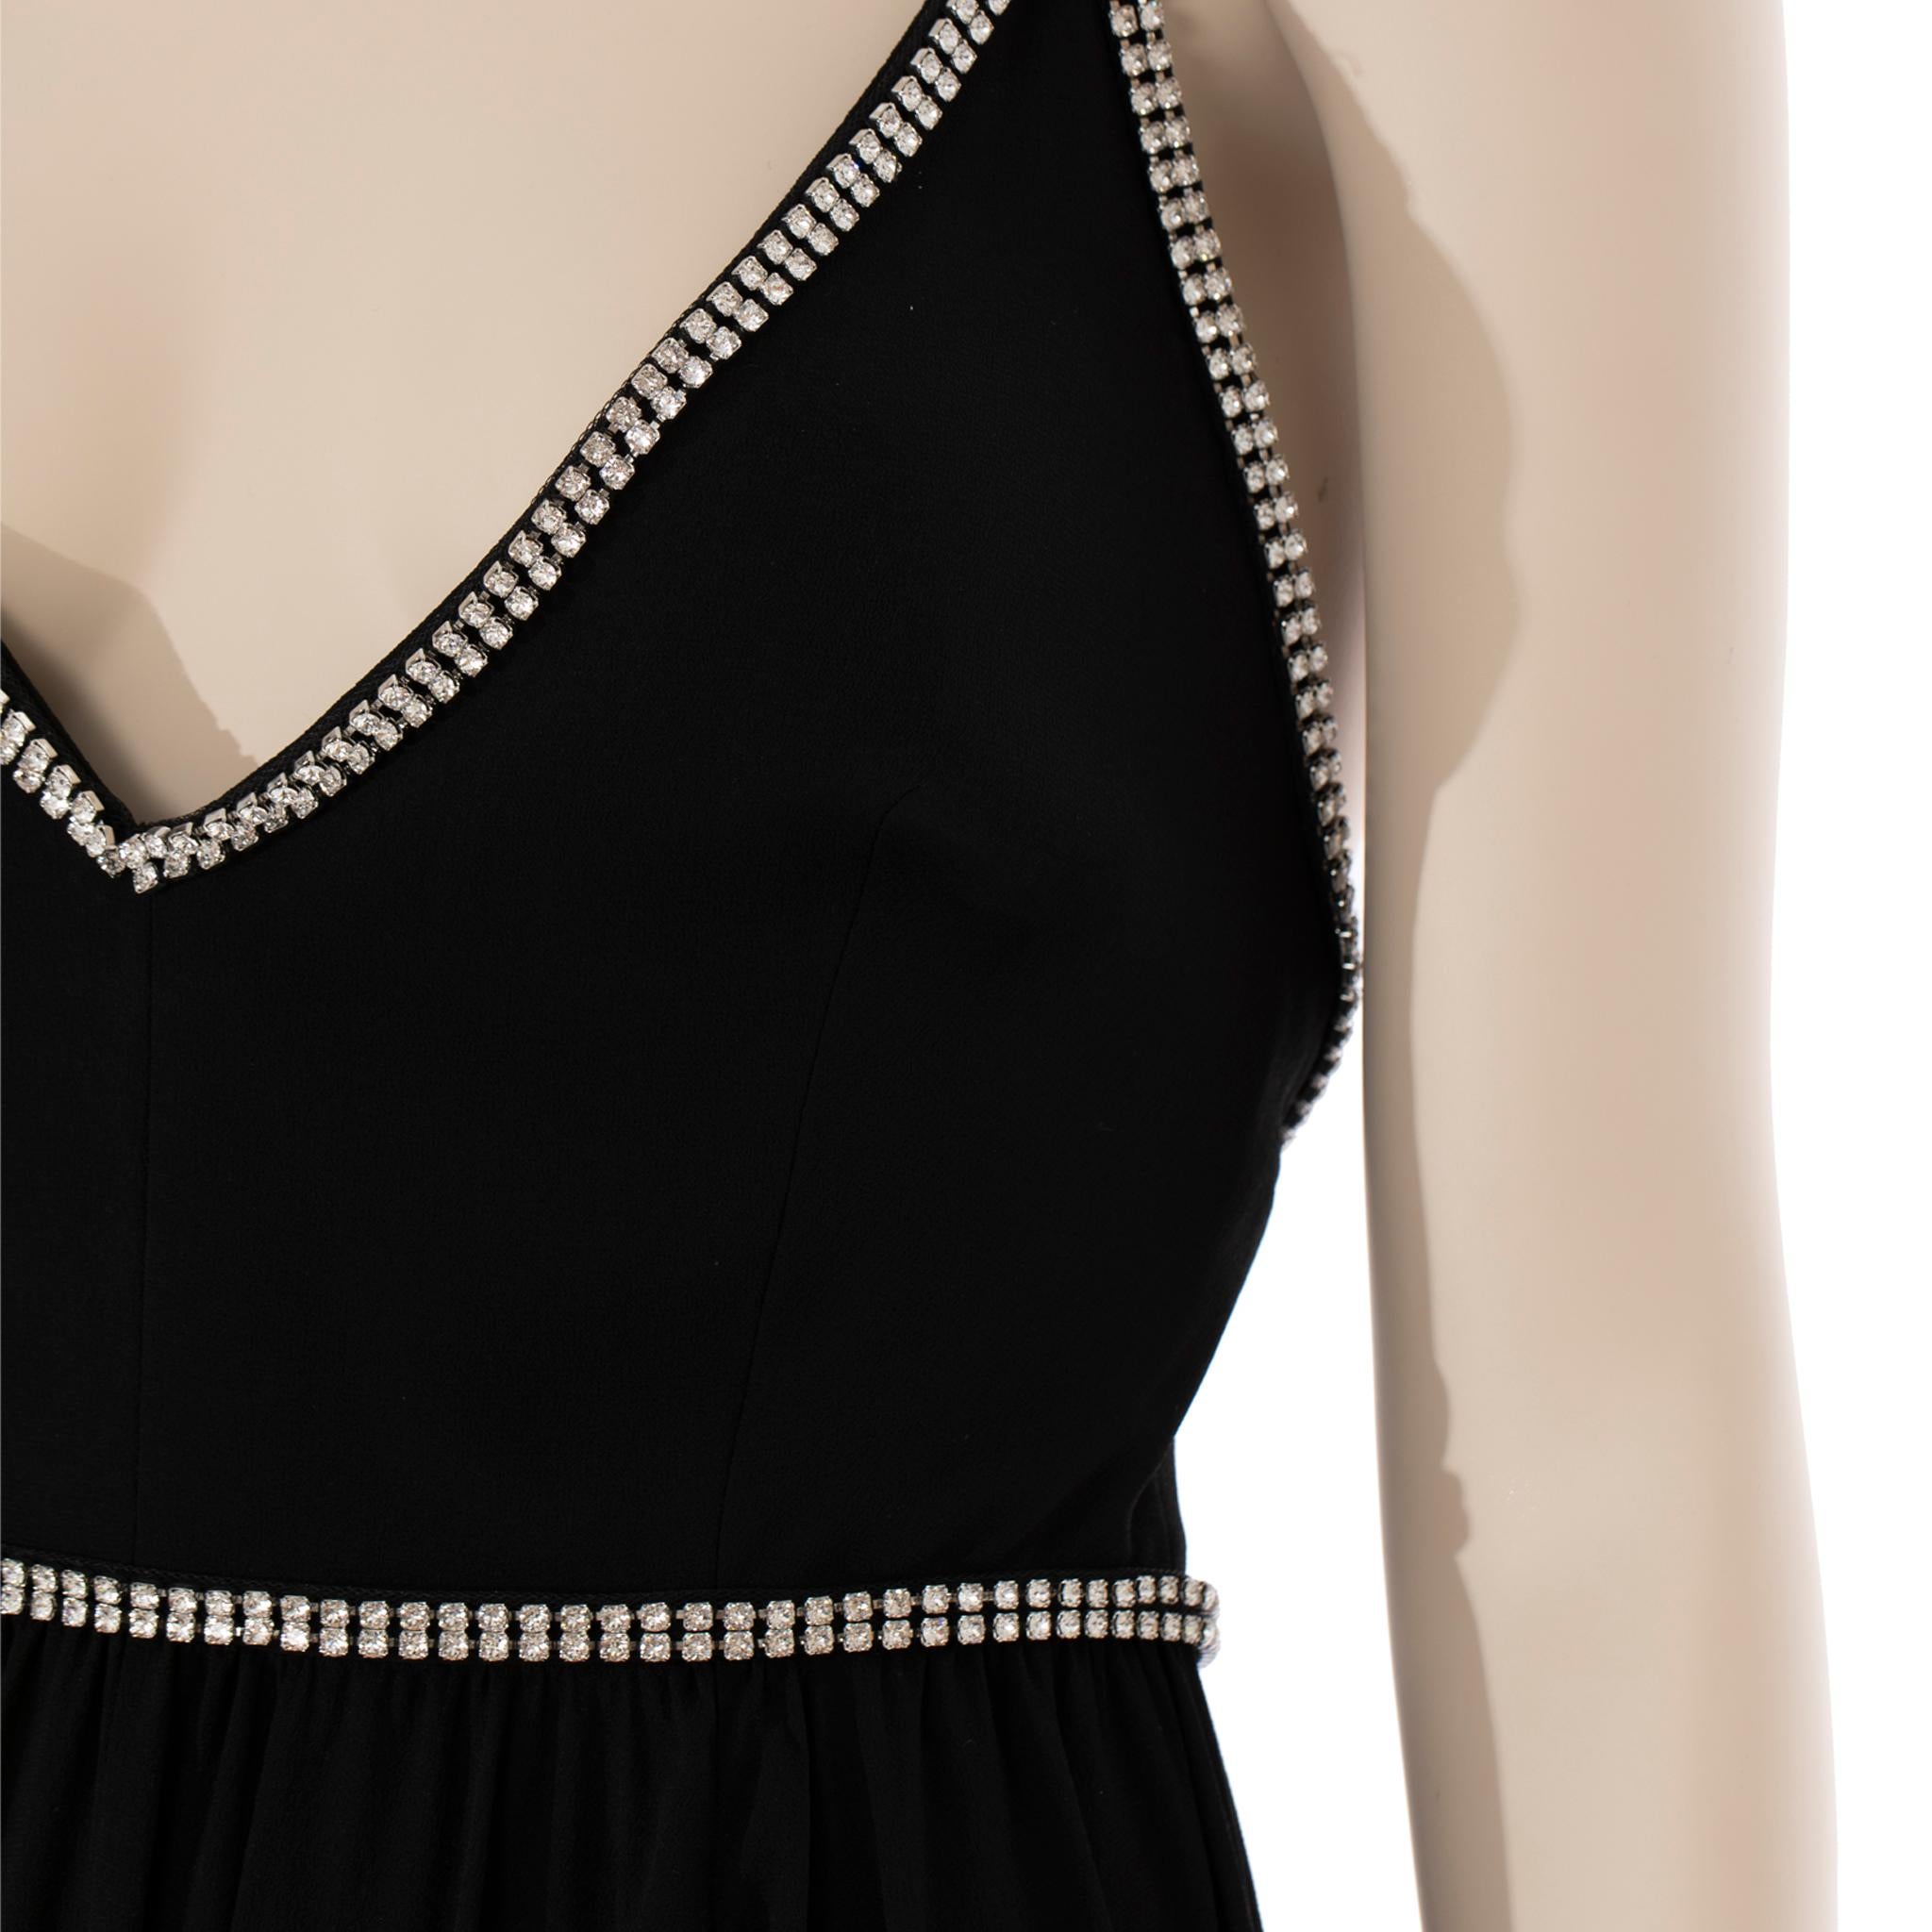 Saint Laurent Black Evening Gown With Crystal Details 38 FR For Sale 2